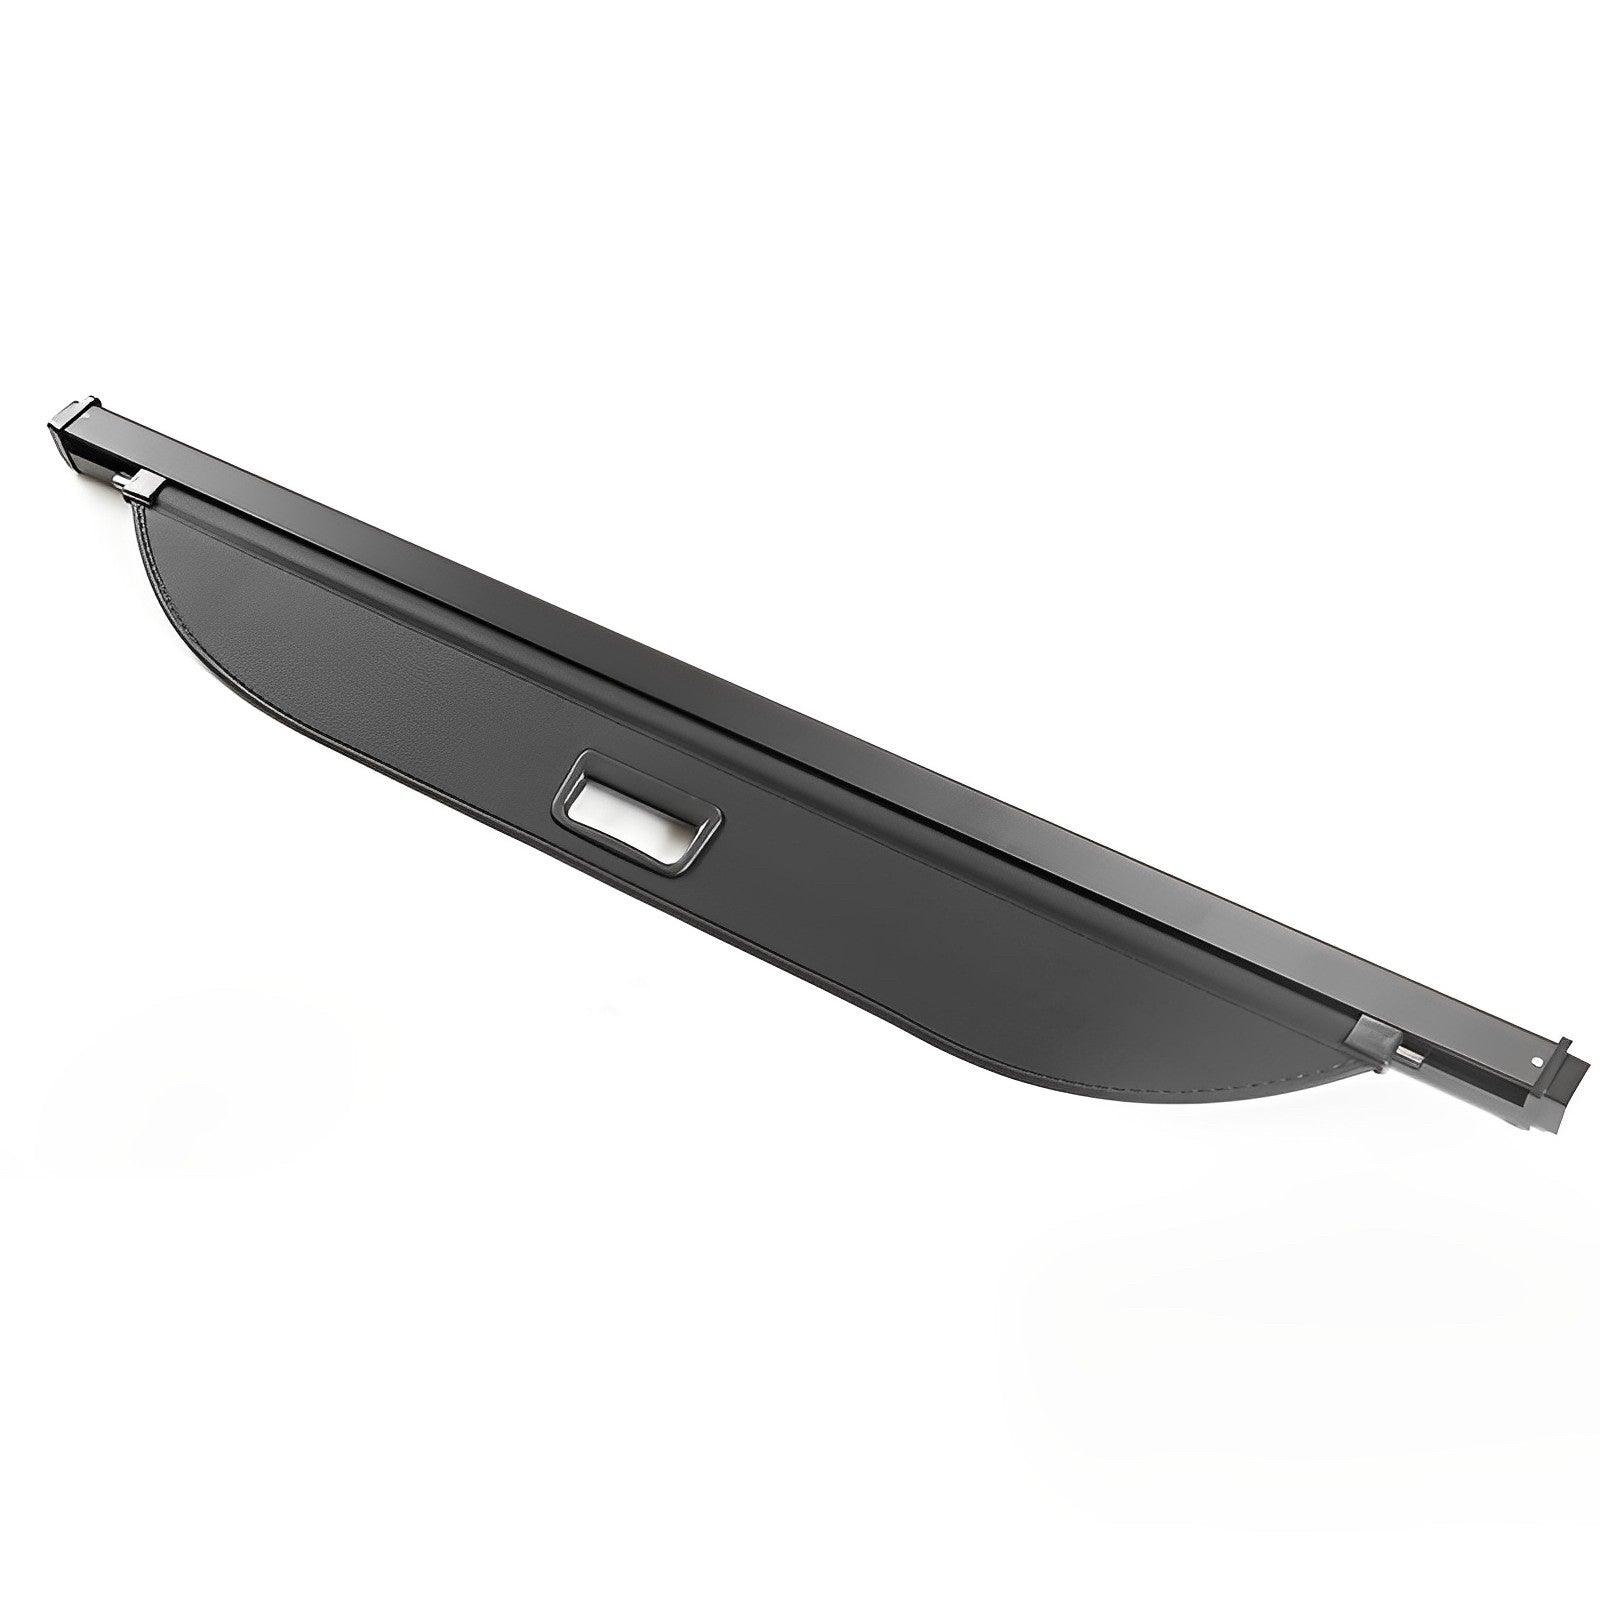 Retractable Rear Trunk Cargo Cover for Tesla Model Y 2020-2021 —  TheHydrataseStore